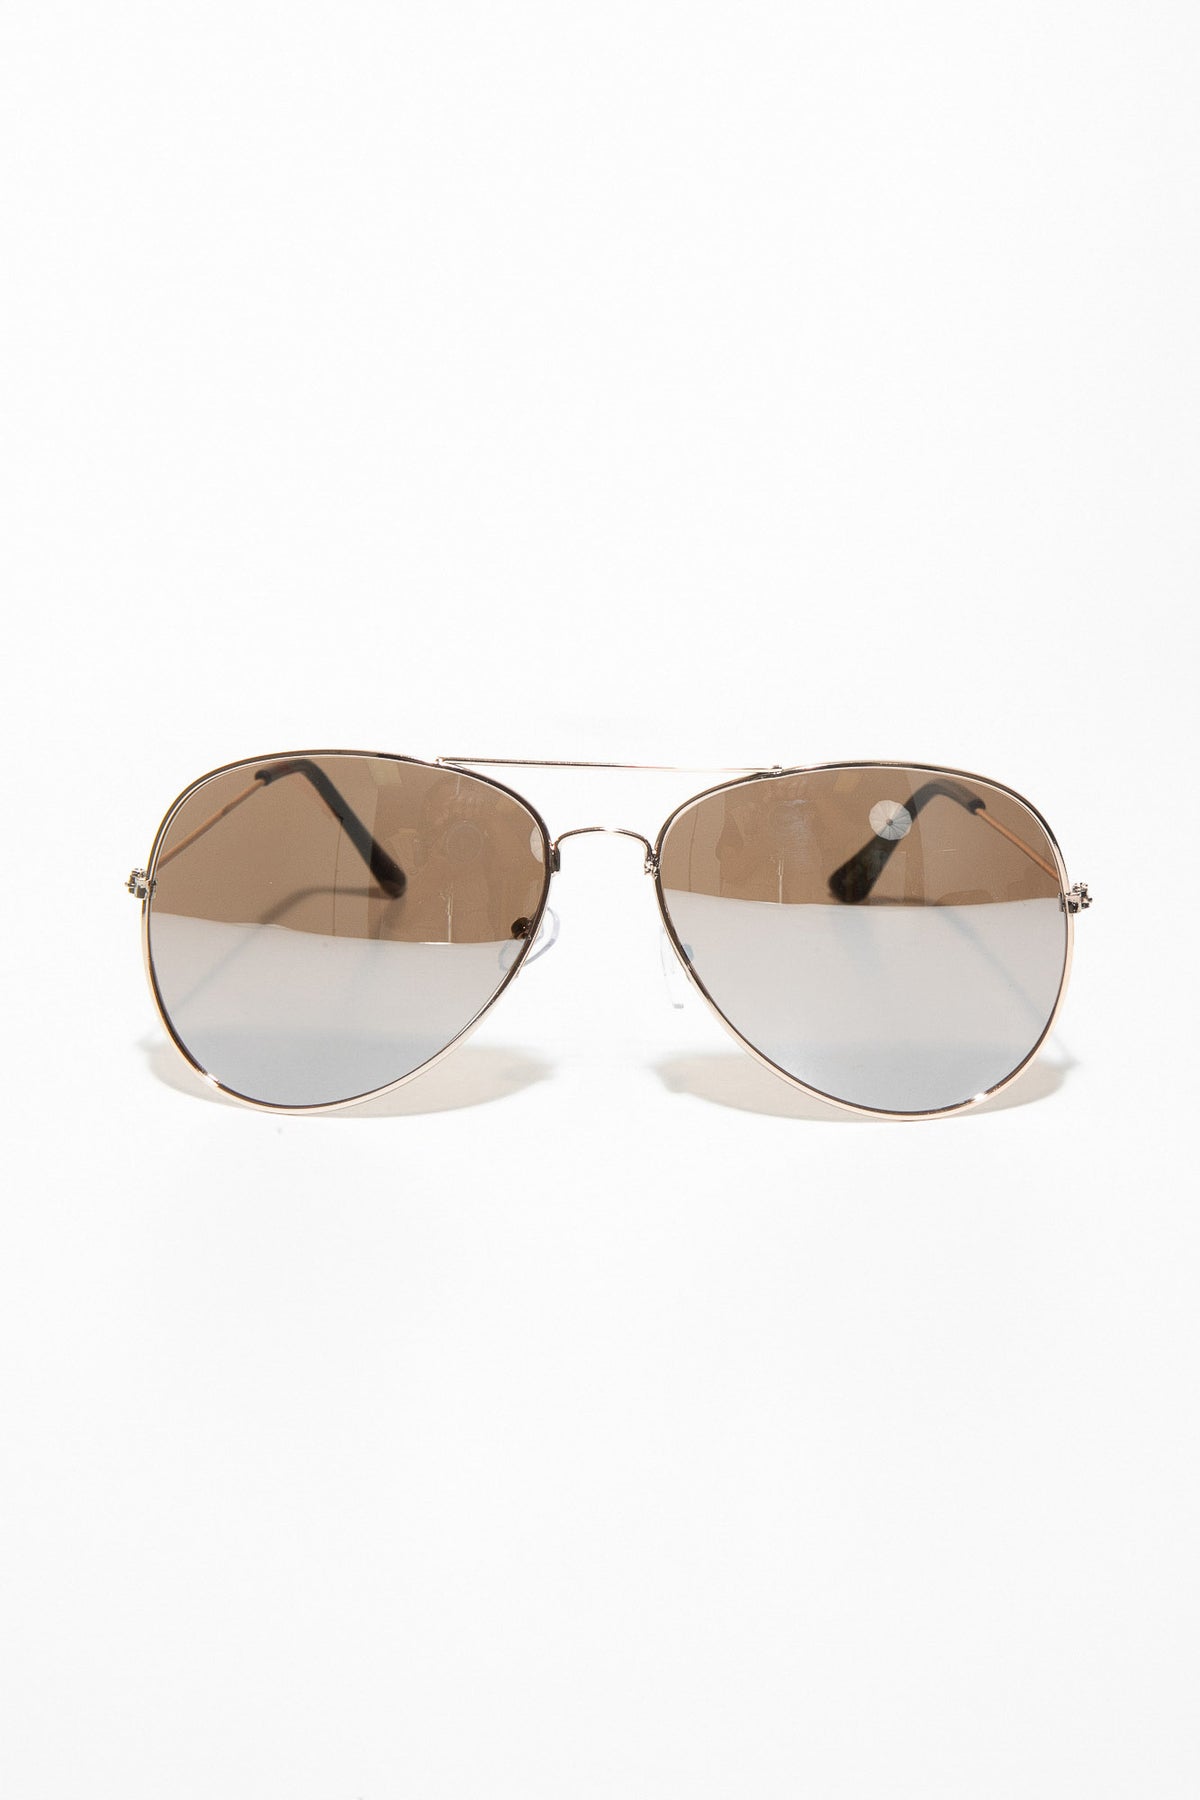 
              Top Gun Classic Aviator Sunglasses - Dull Gold - Swank A Posh
            